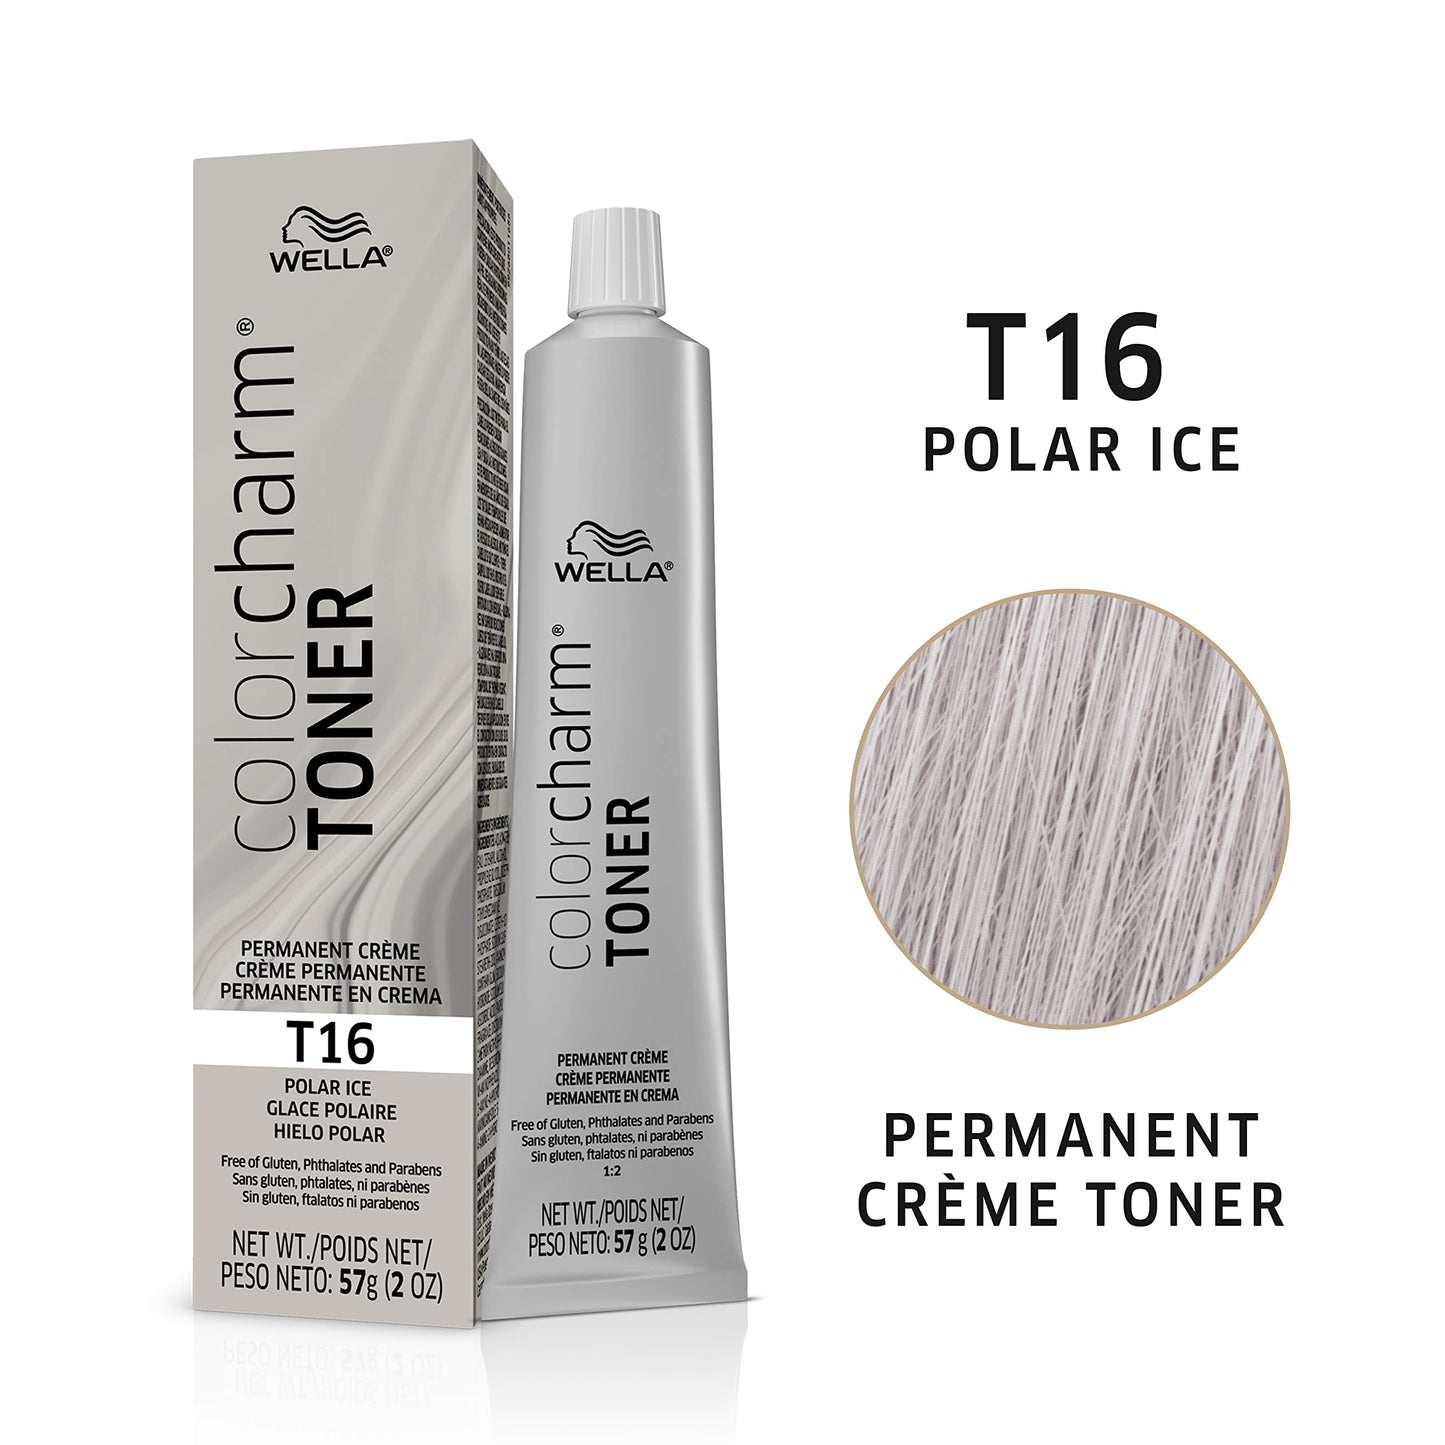 WELLA Color Charm Permanent Crème Toner, Free of Animal-Derivied Ingredients, Parabens Free, Gluten Free, T16 Polar Ice, 2 oz